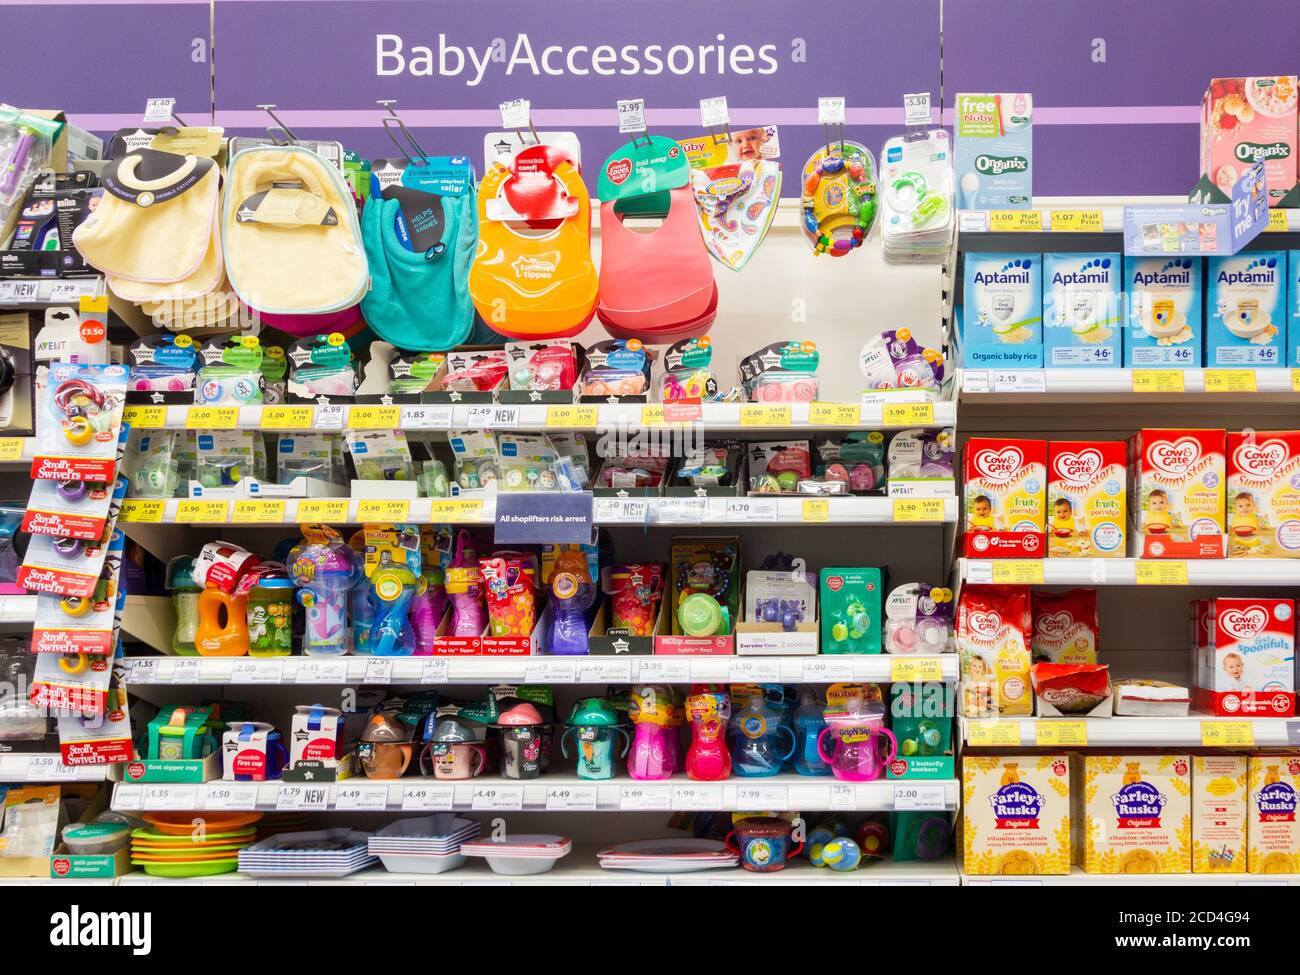 Baby Accessories in Tesco supermarket. UK Stock Photo